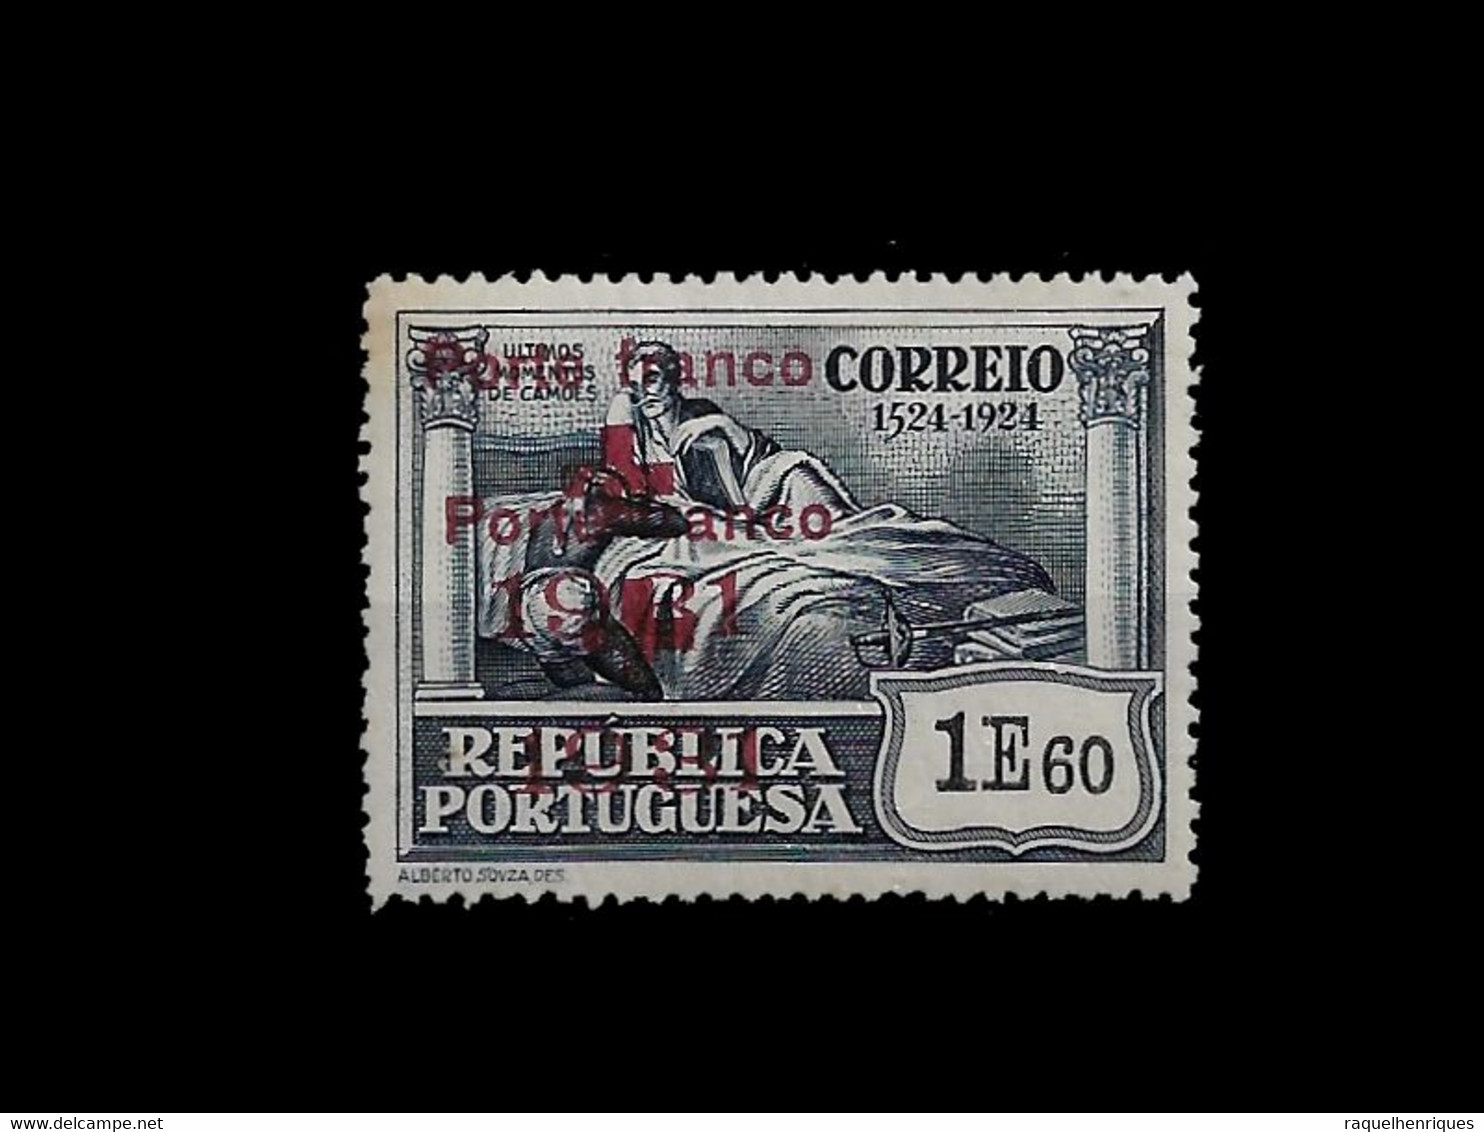 PORTUGAL PORTE FRANCO - 1931 ERROR DOUBLE SURCHARGED MNH (PLB#01-120) - Ungebraucht